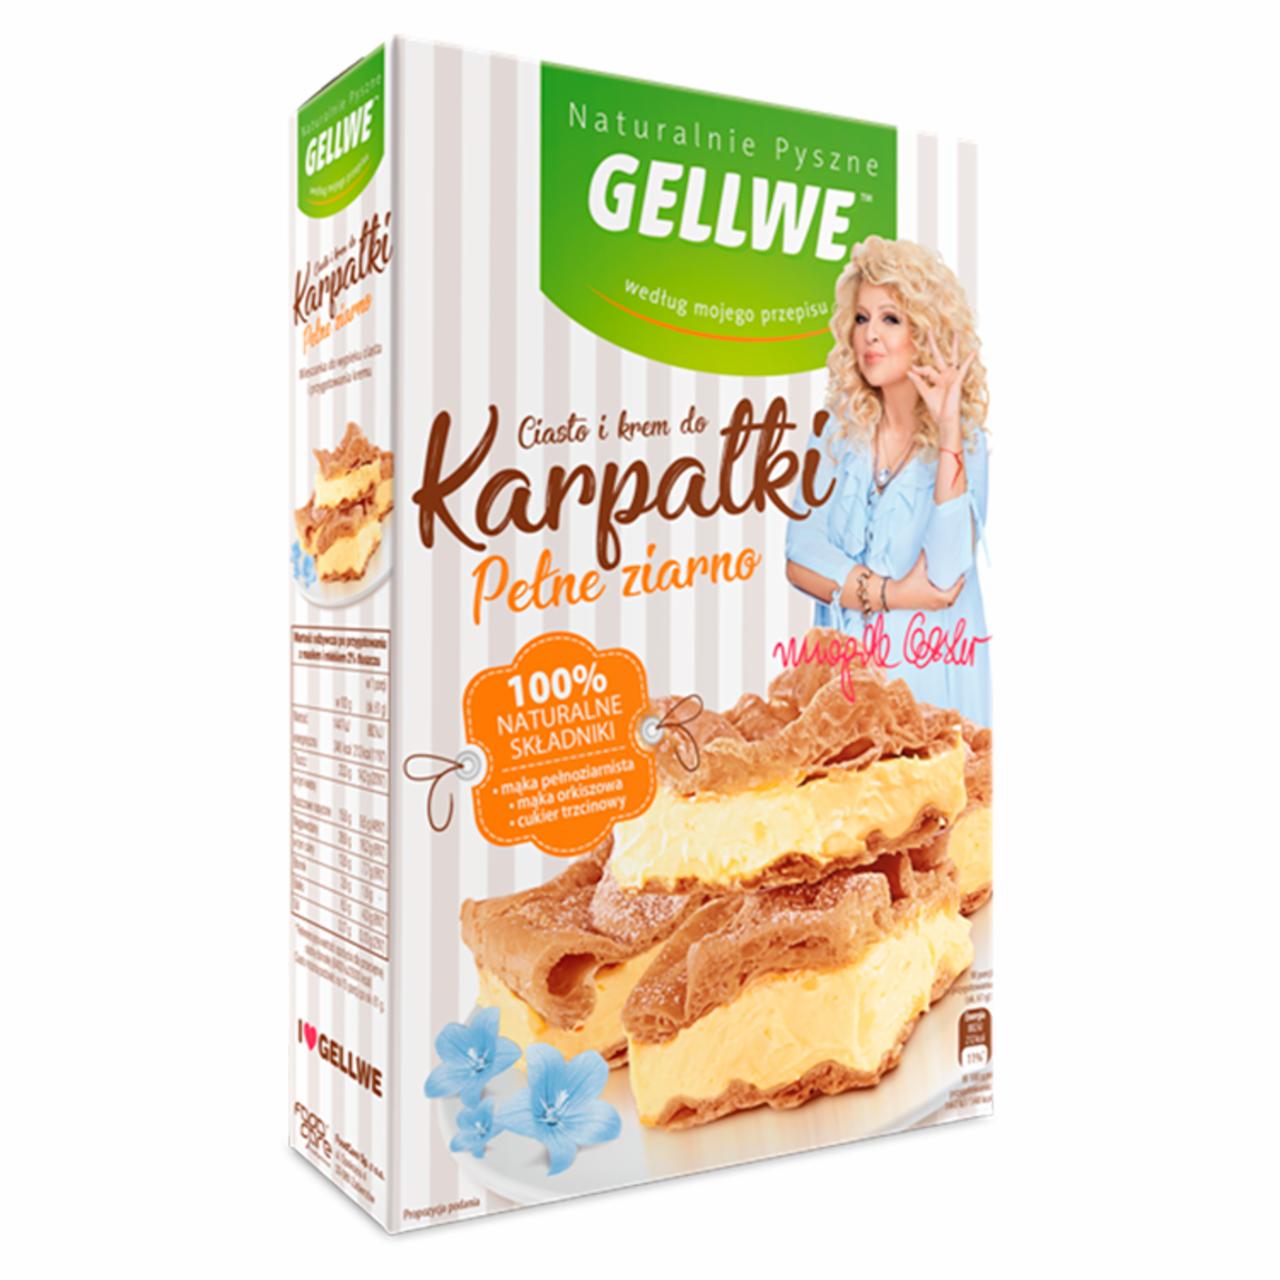 Photo - Gellwe Naturalnie Pyszne Karpatka Cake and Cream 290 g